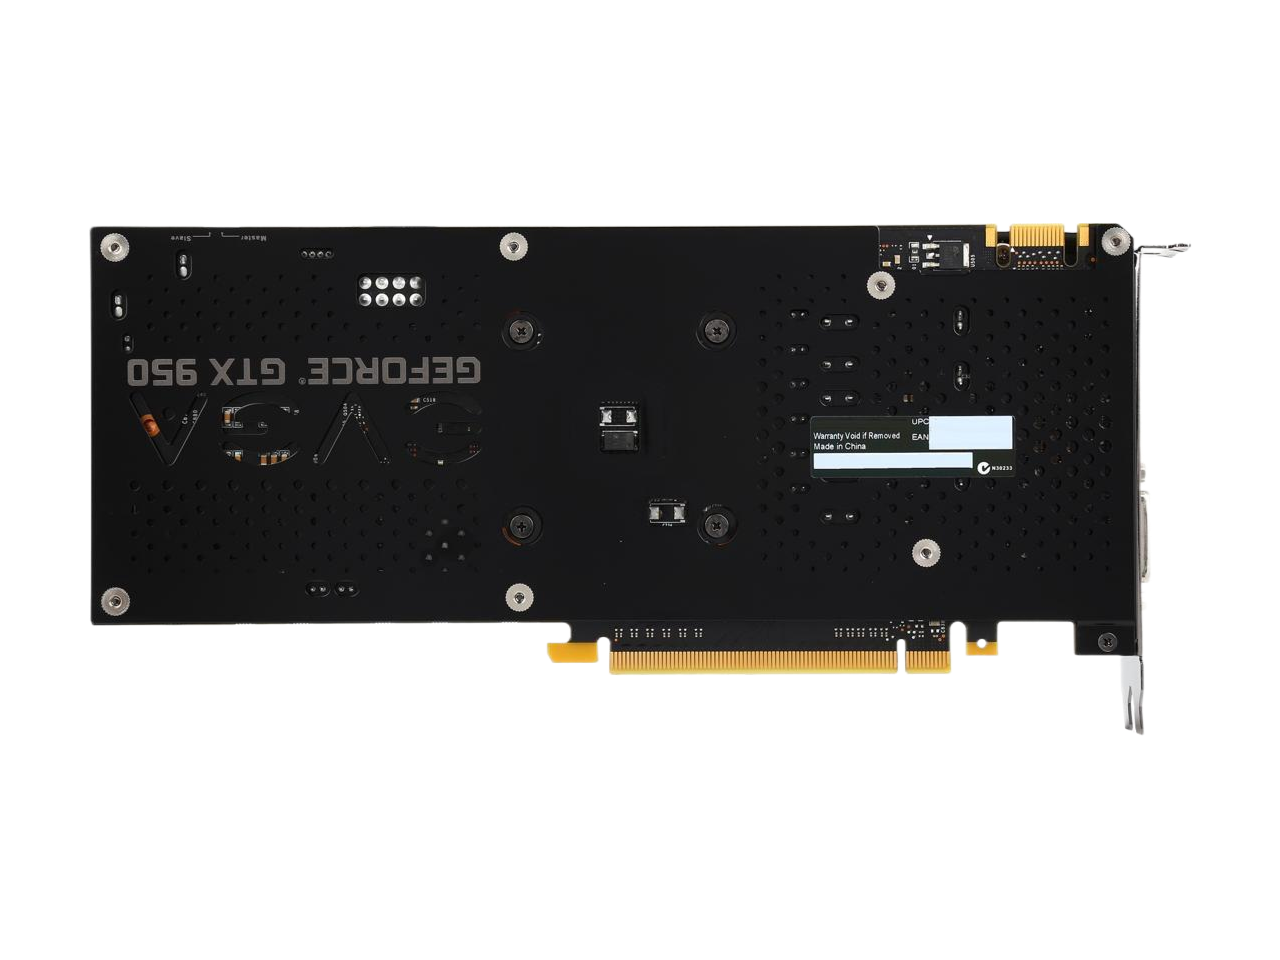 EVGA GeForce GTX 950 2GB SC+ GAMING, Silent Cooling Gaming Graphics Card 02G-P4-2956-RX